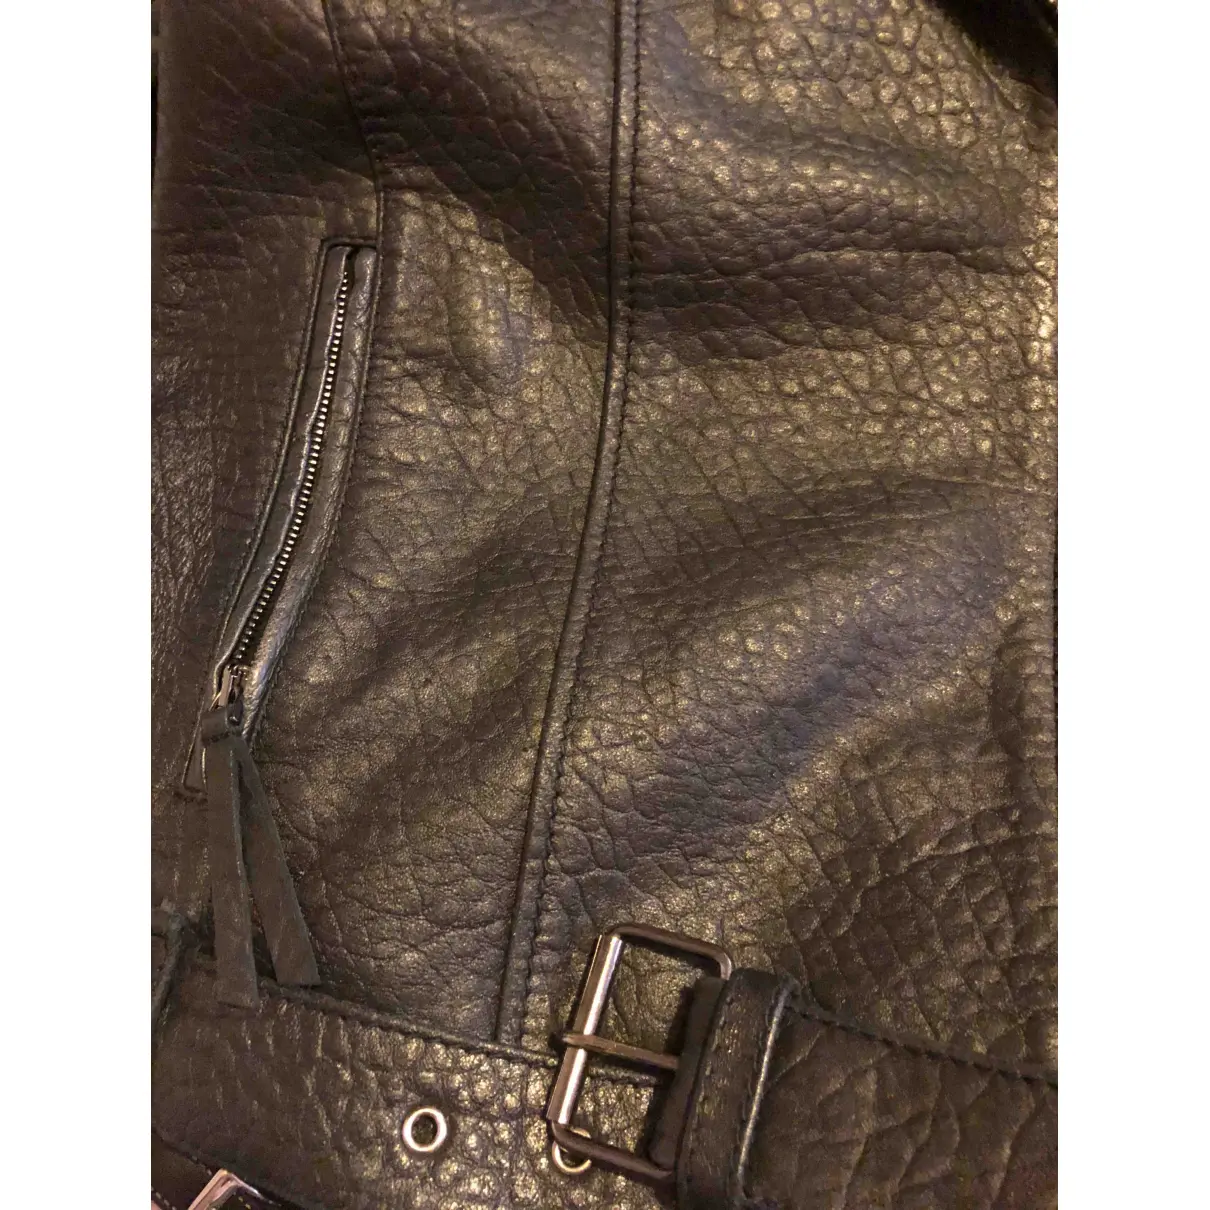 Buy 7 For All Mankind Leather biker jacket online